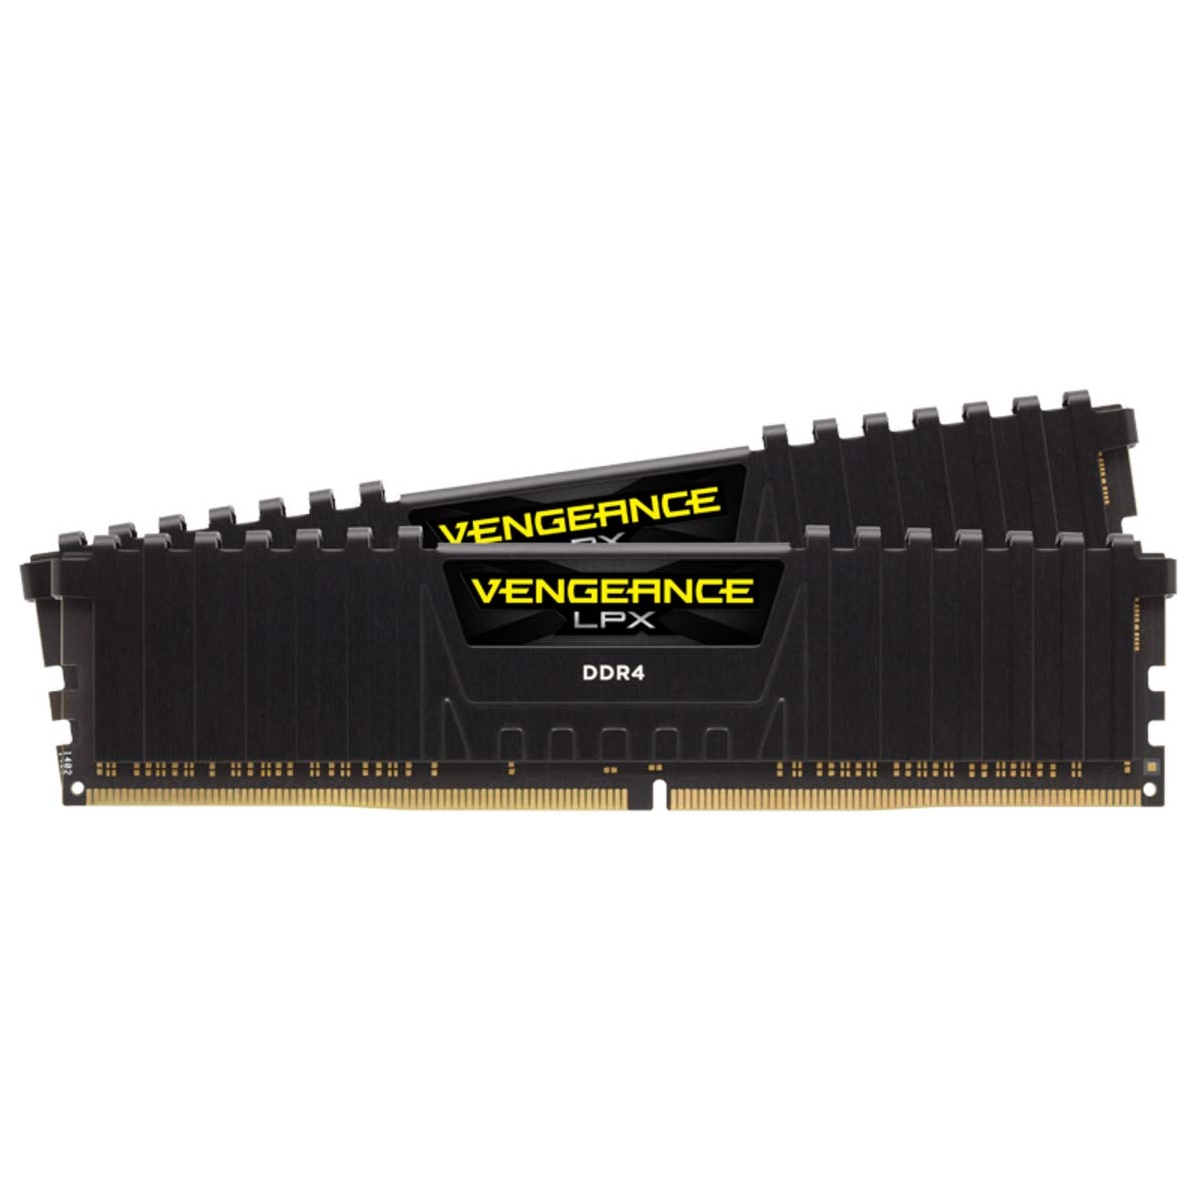 Bild Vengeance LPX schwarz DIMM Kit 64GB, DDR4-3000, CL16-20-20-38 (CMK64GX4M2D3000C16)